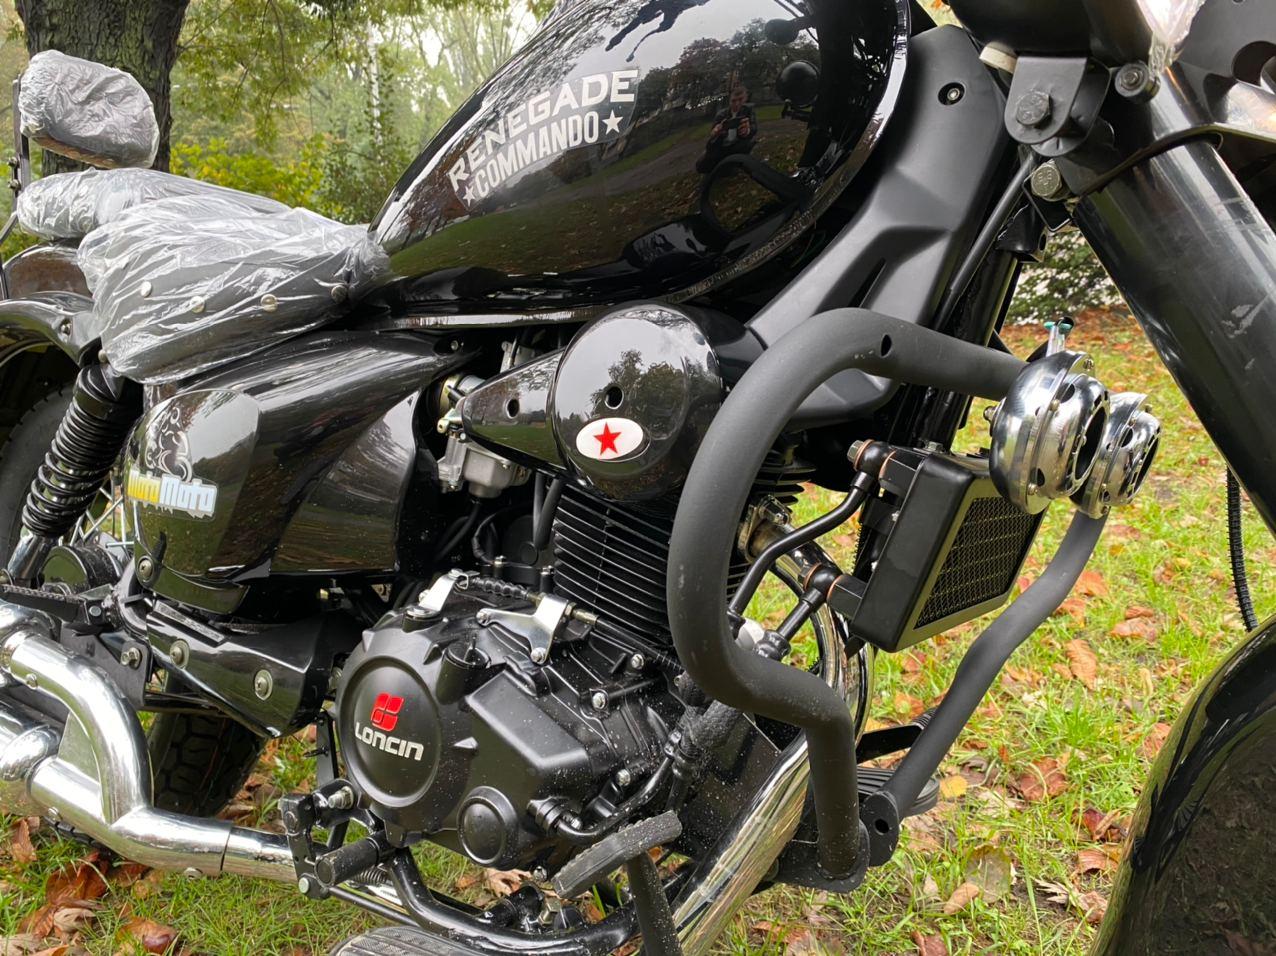 Характеристики KV Renegade (Loncin) 250cc